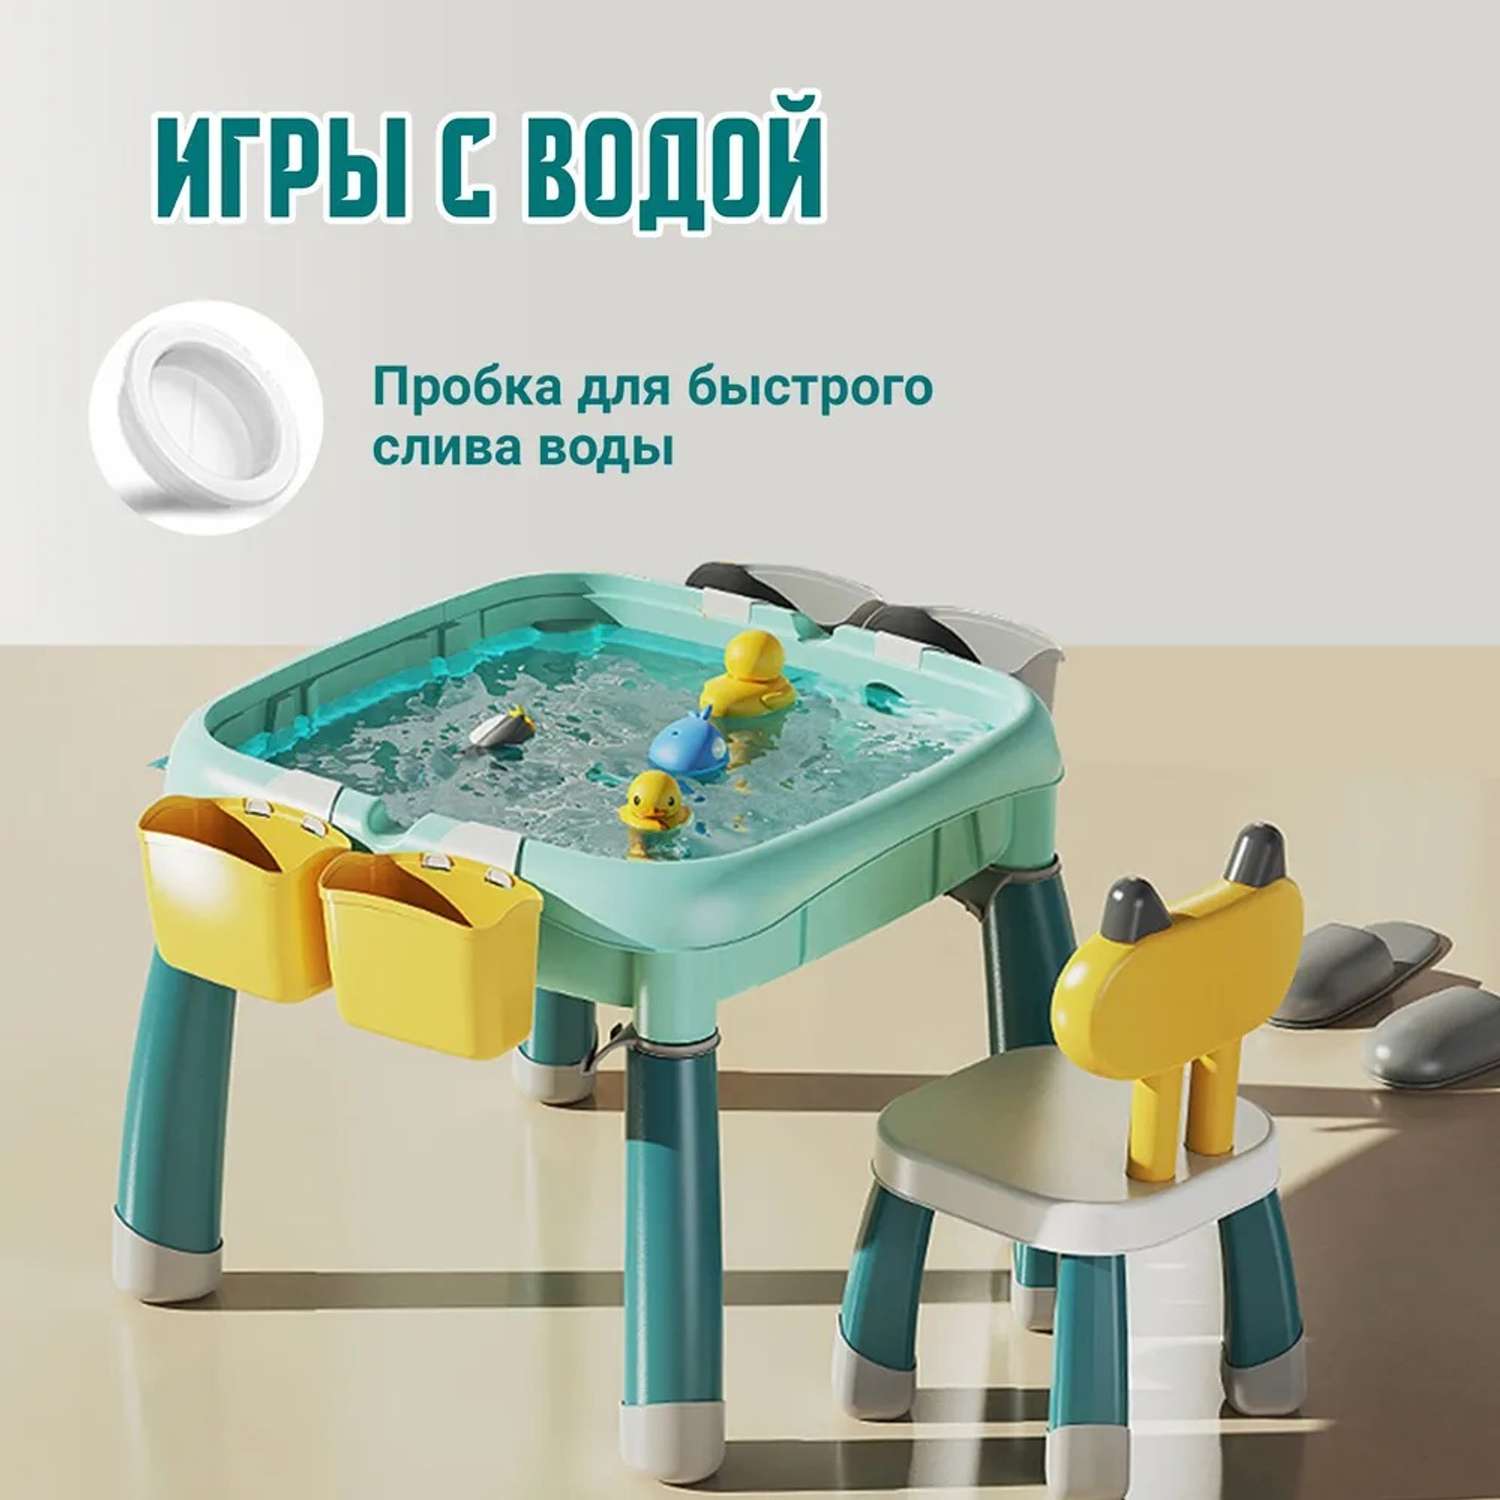 Развивающий детский стол ТЕХНО со стулом для конструктора Лего - фото 10